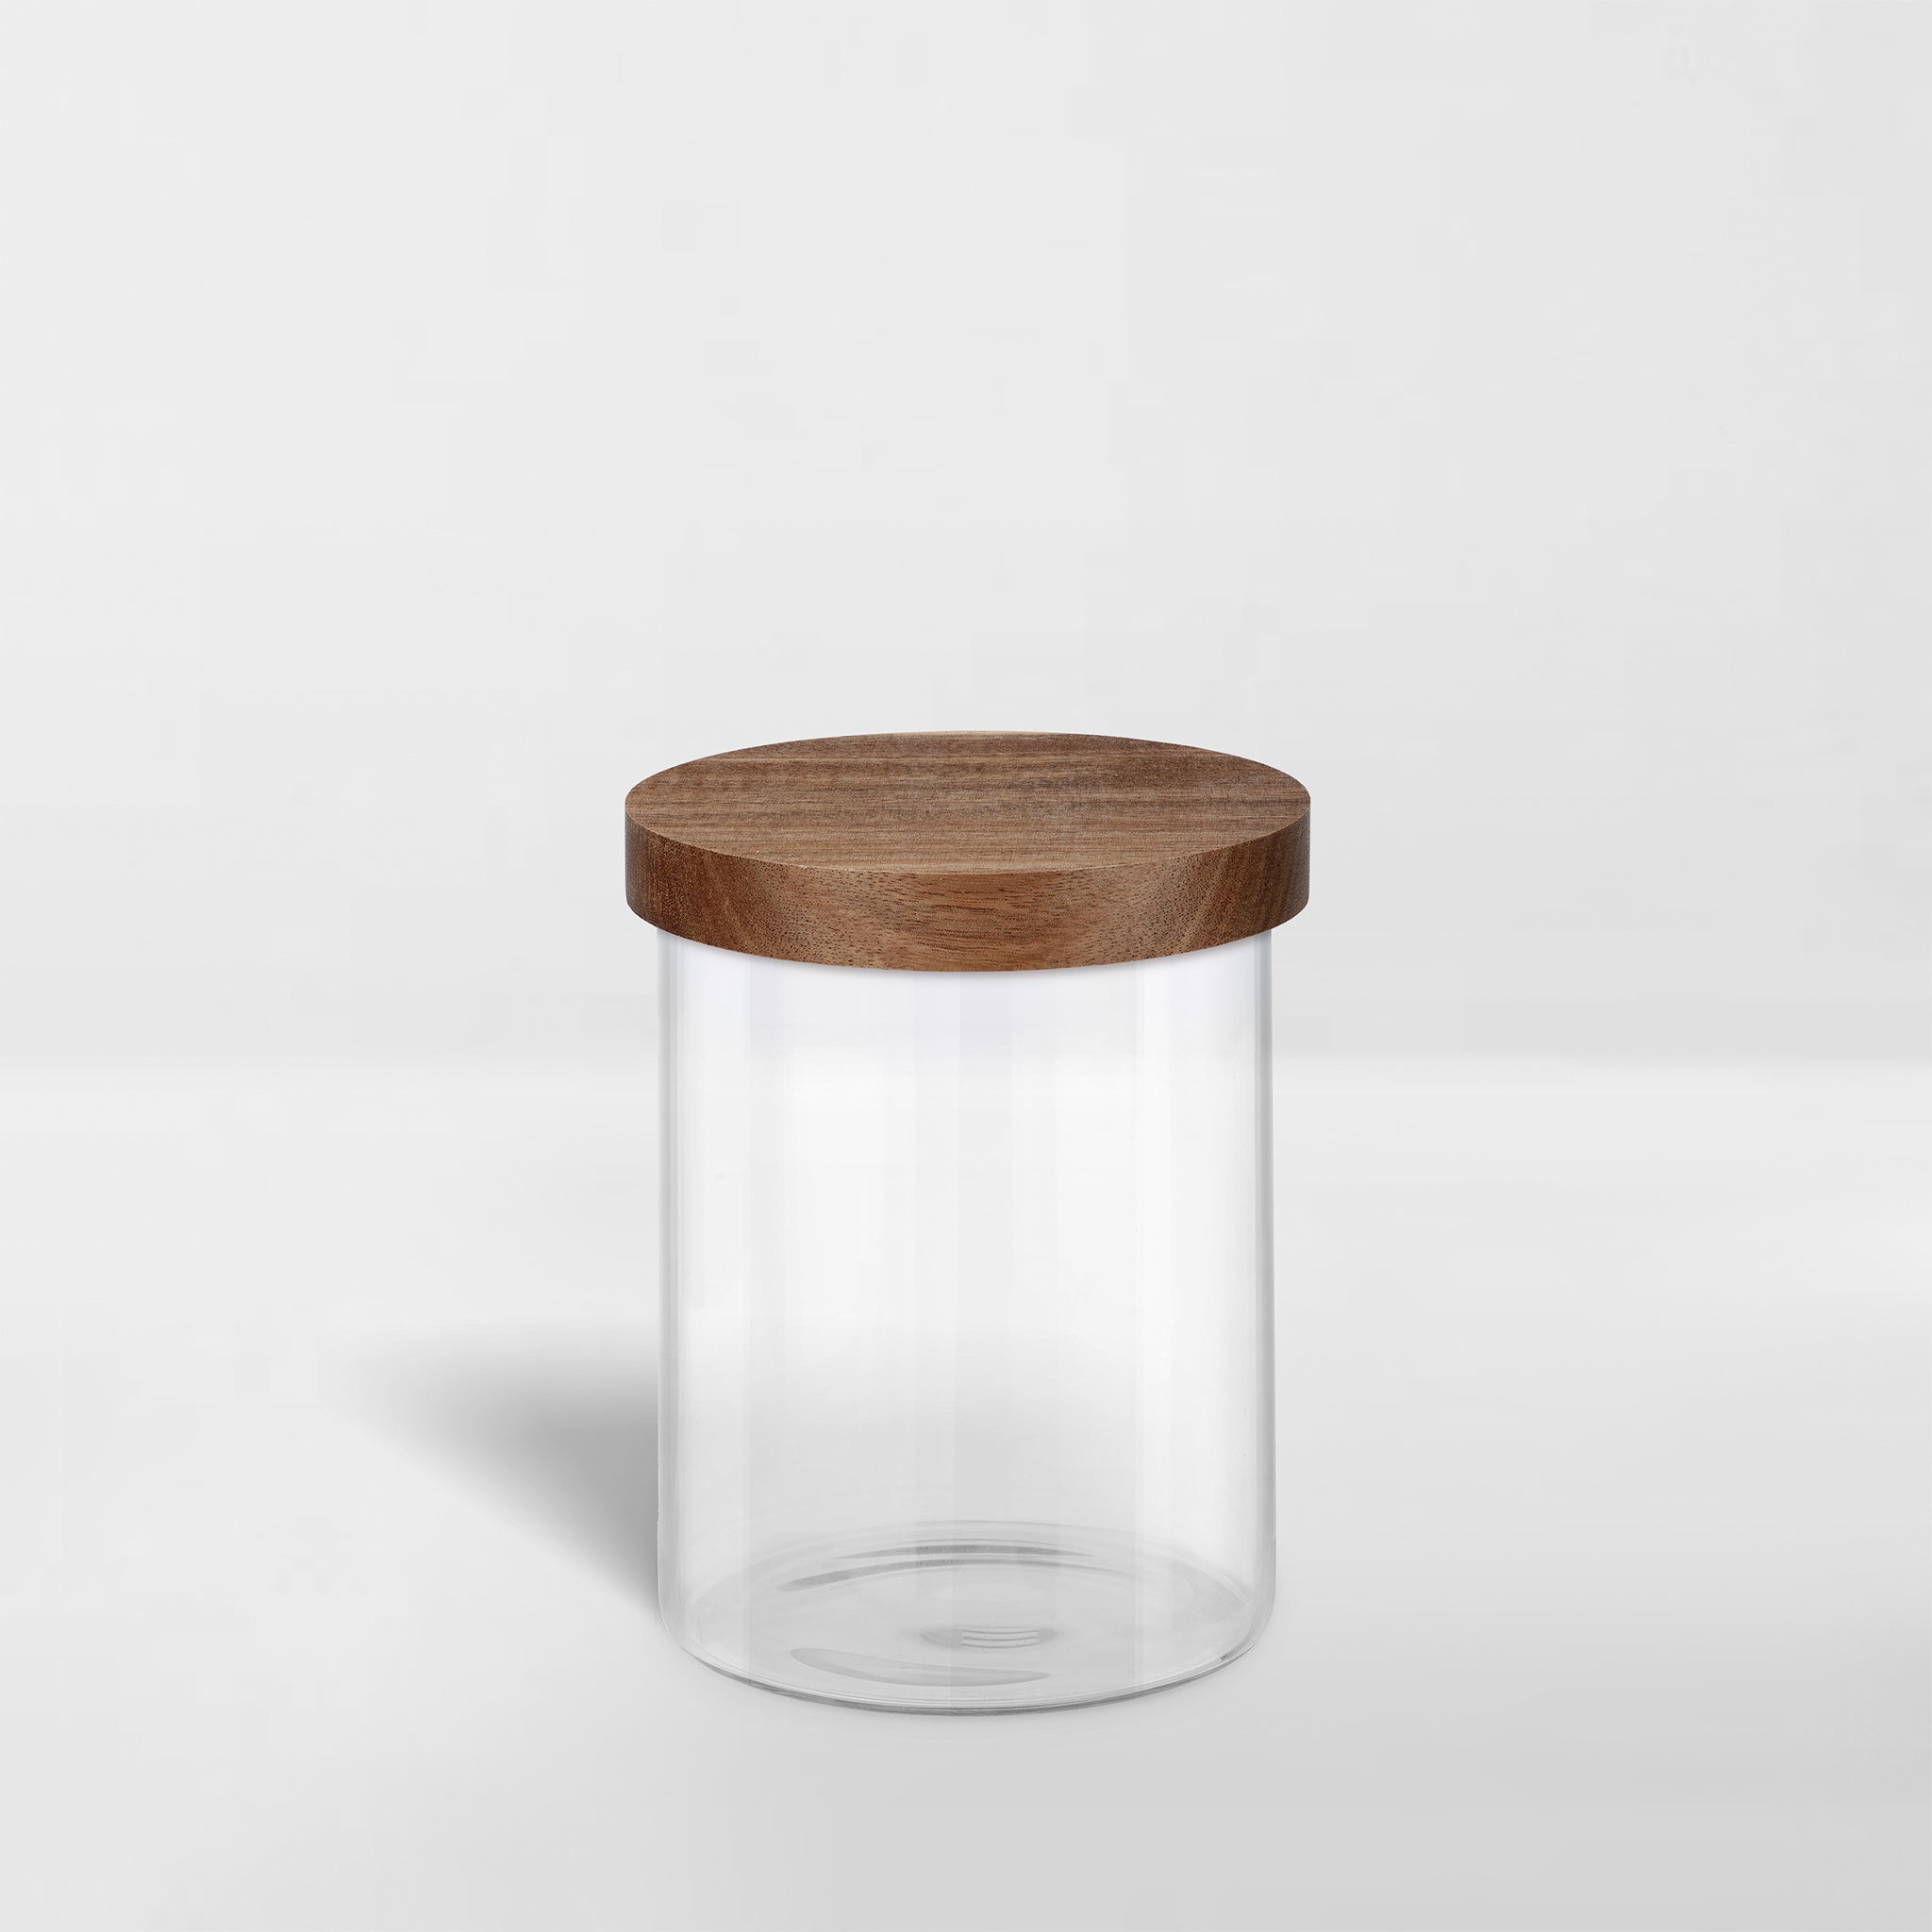 NeatMethod Glass Spice Jars with Acacia Wood Lids, Set of 10 +